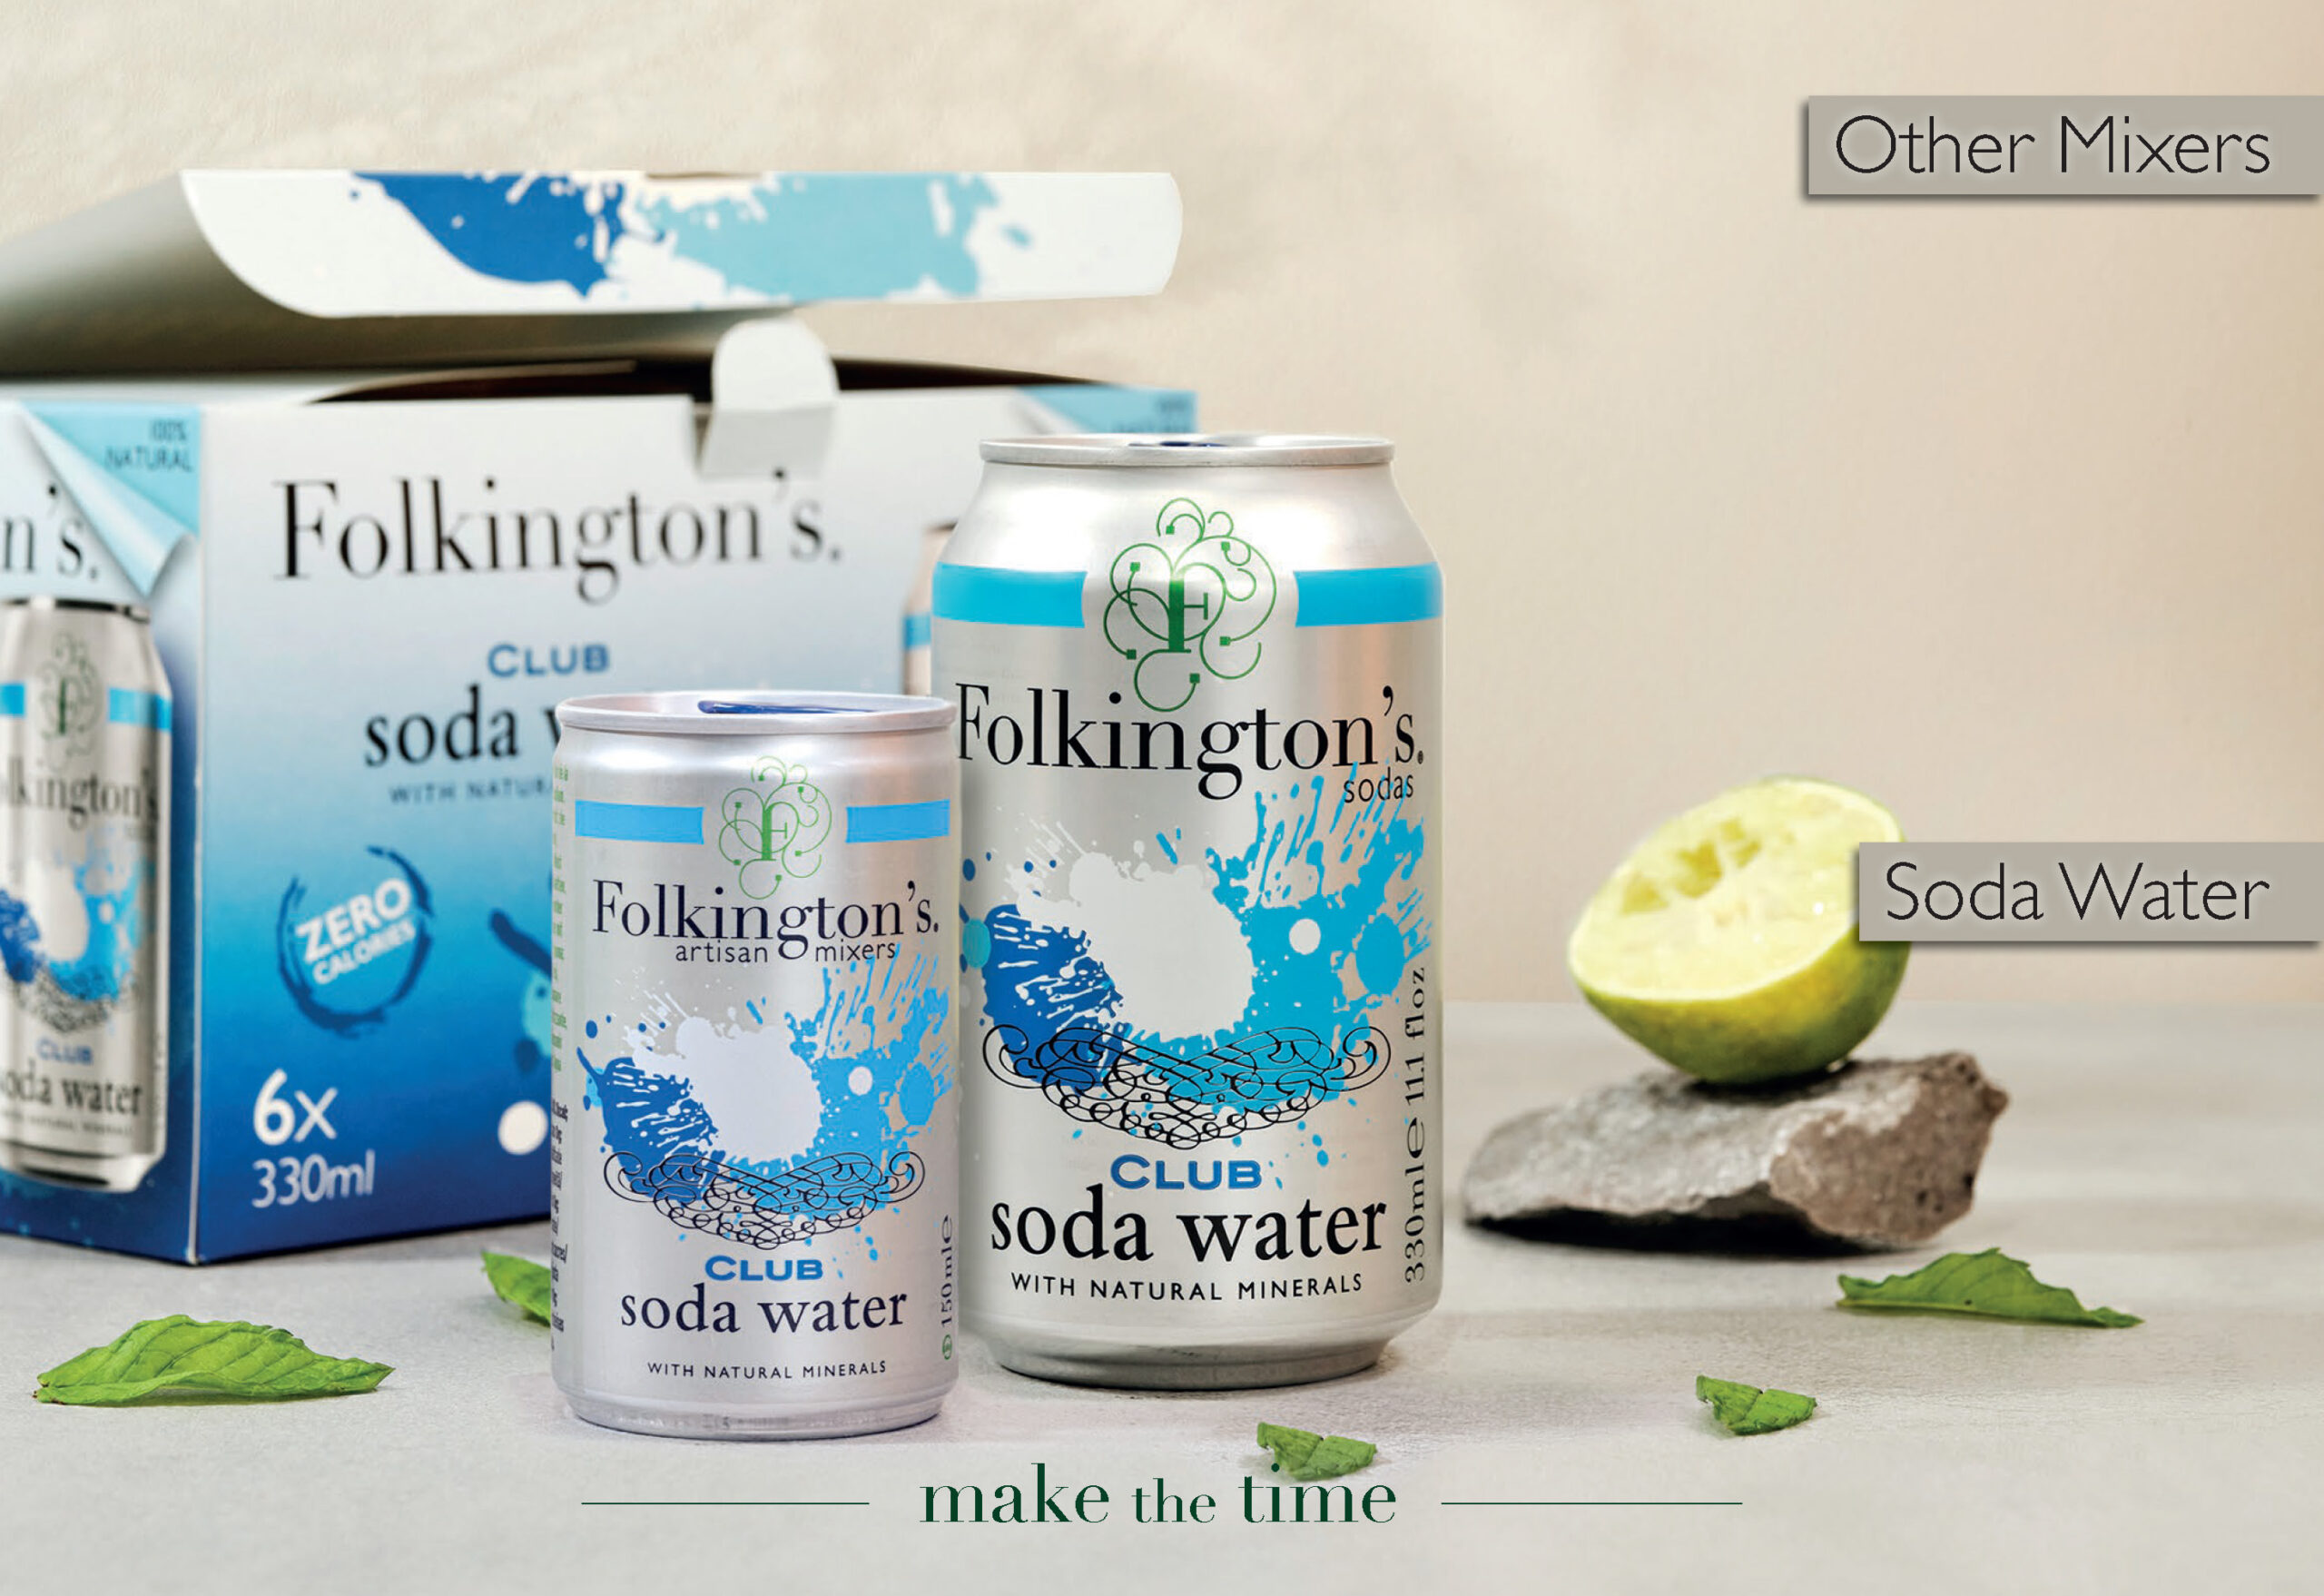 Product: Folkington's Authentic Juices & Mixers